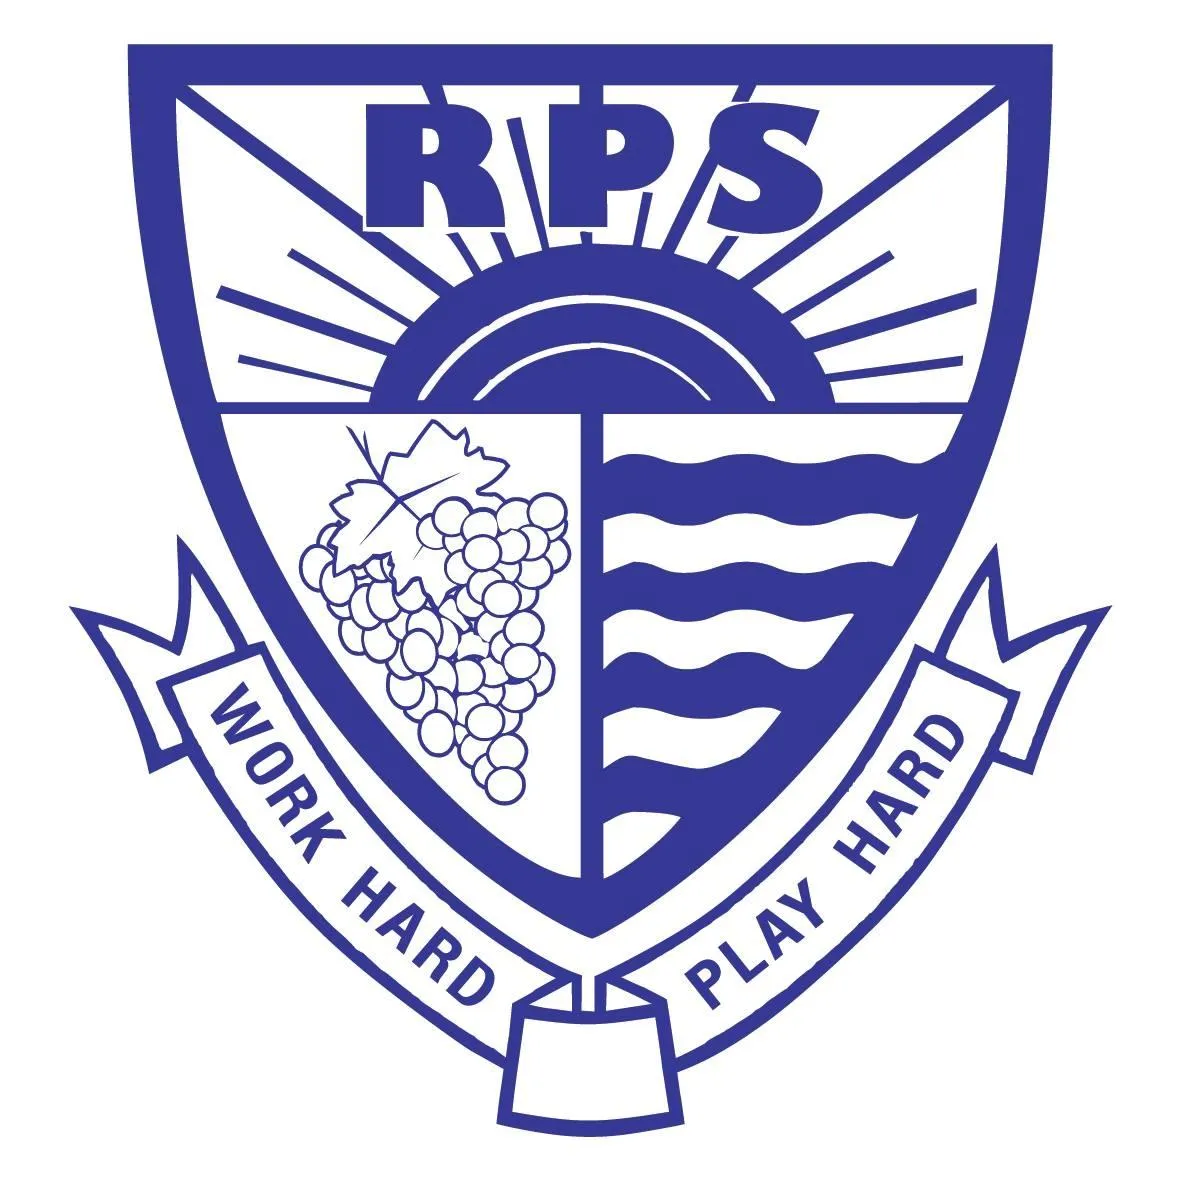 Robinvale Primary School brand logo